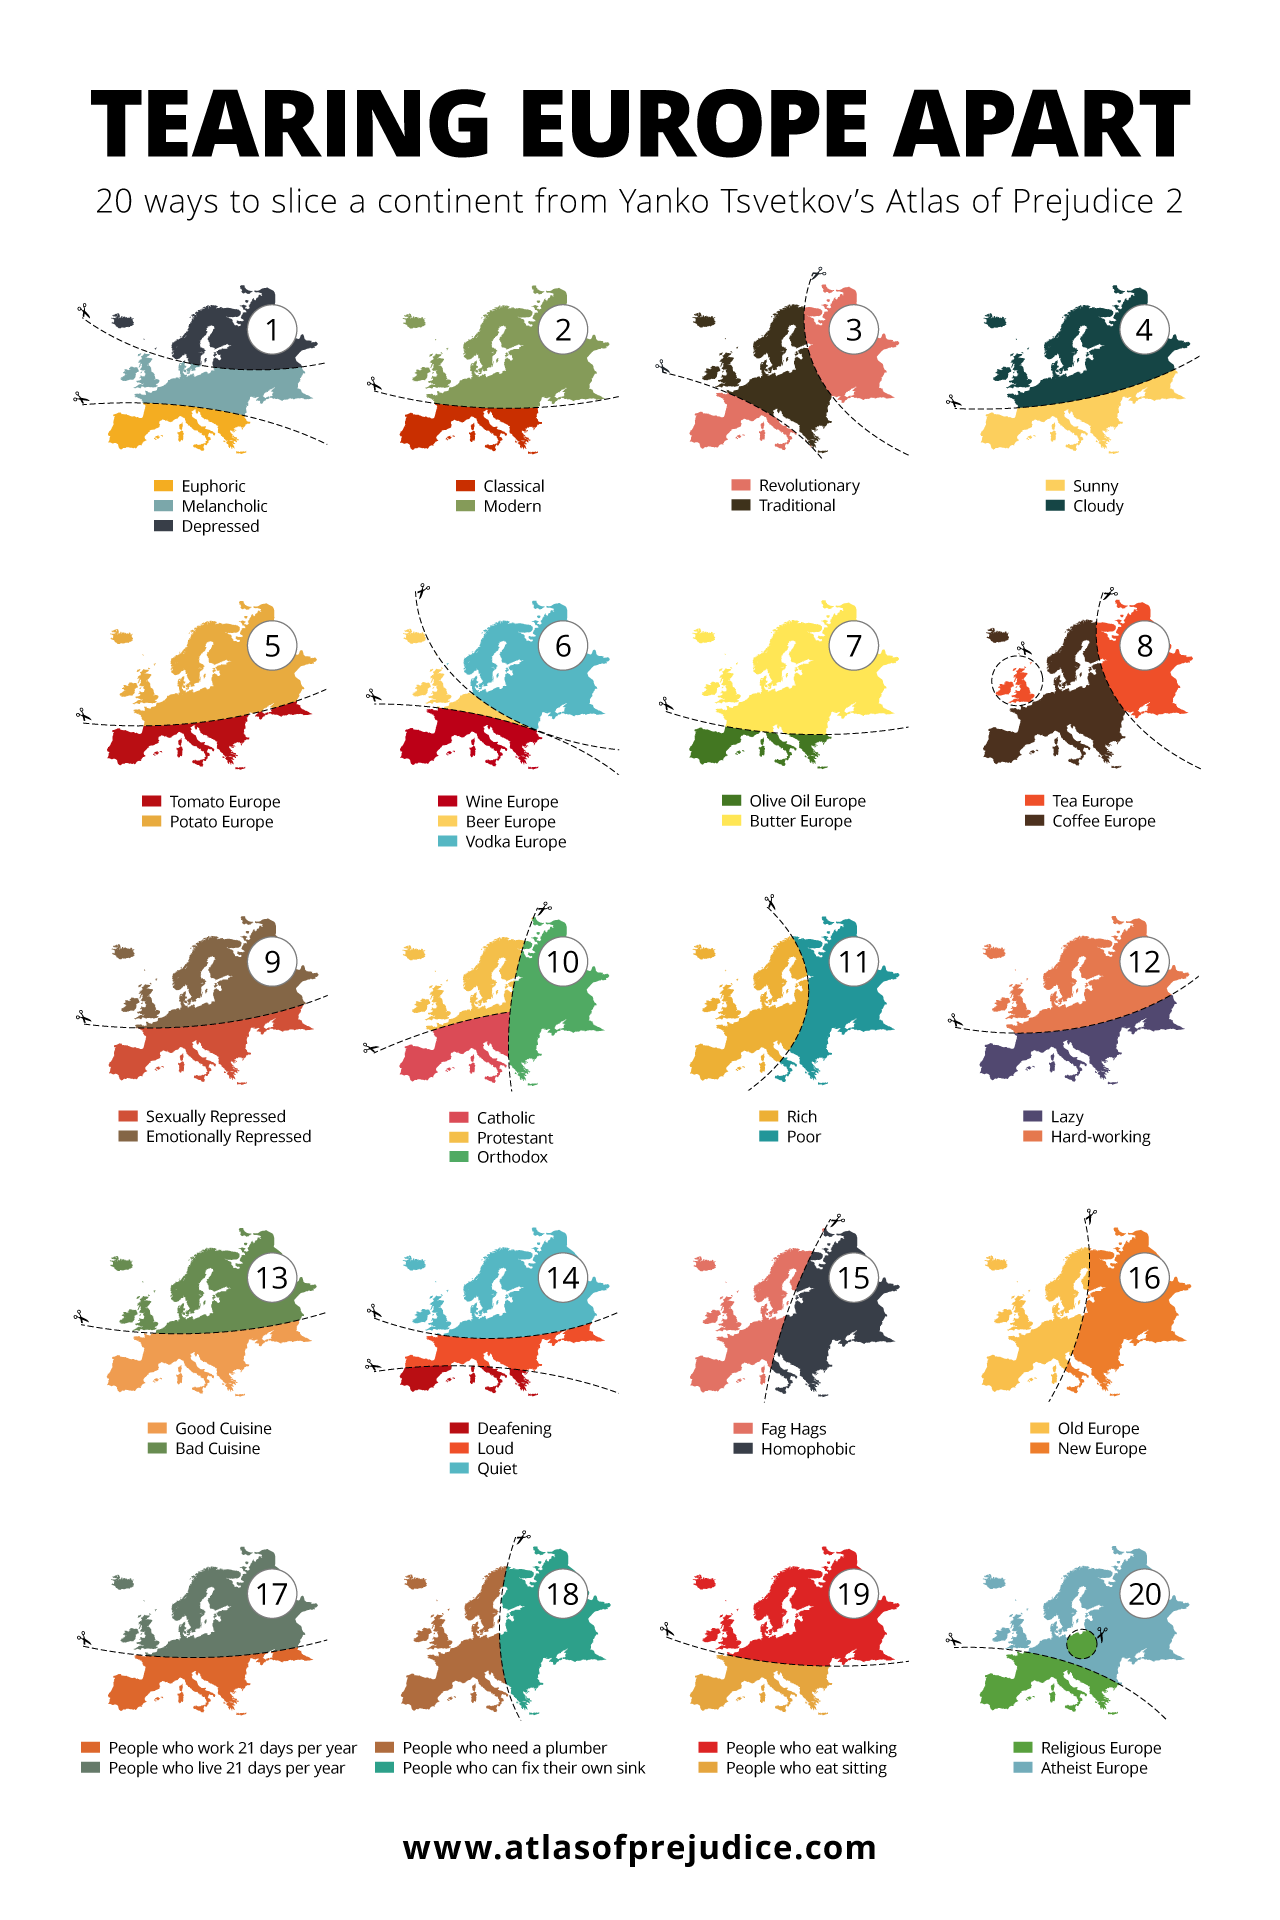 20 ways to slice the European continent from Atlas of Prejudice 2 by Yanko Tsvetkov.